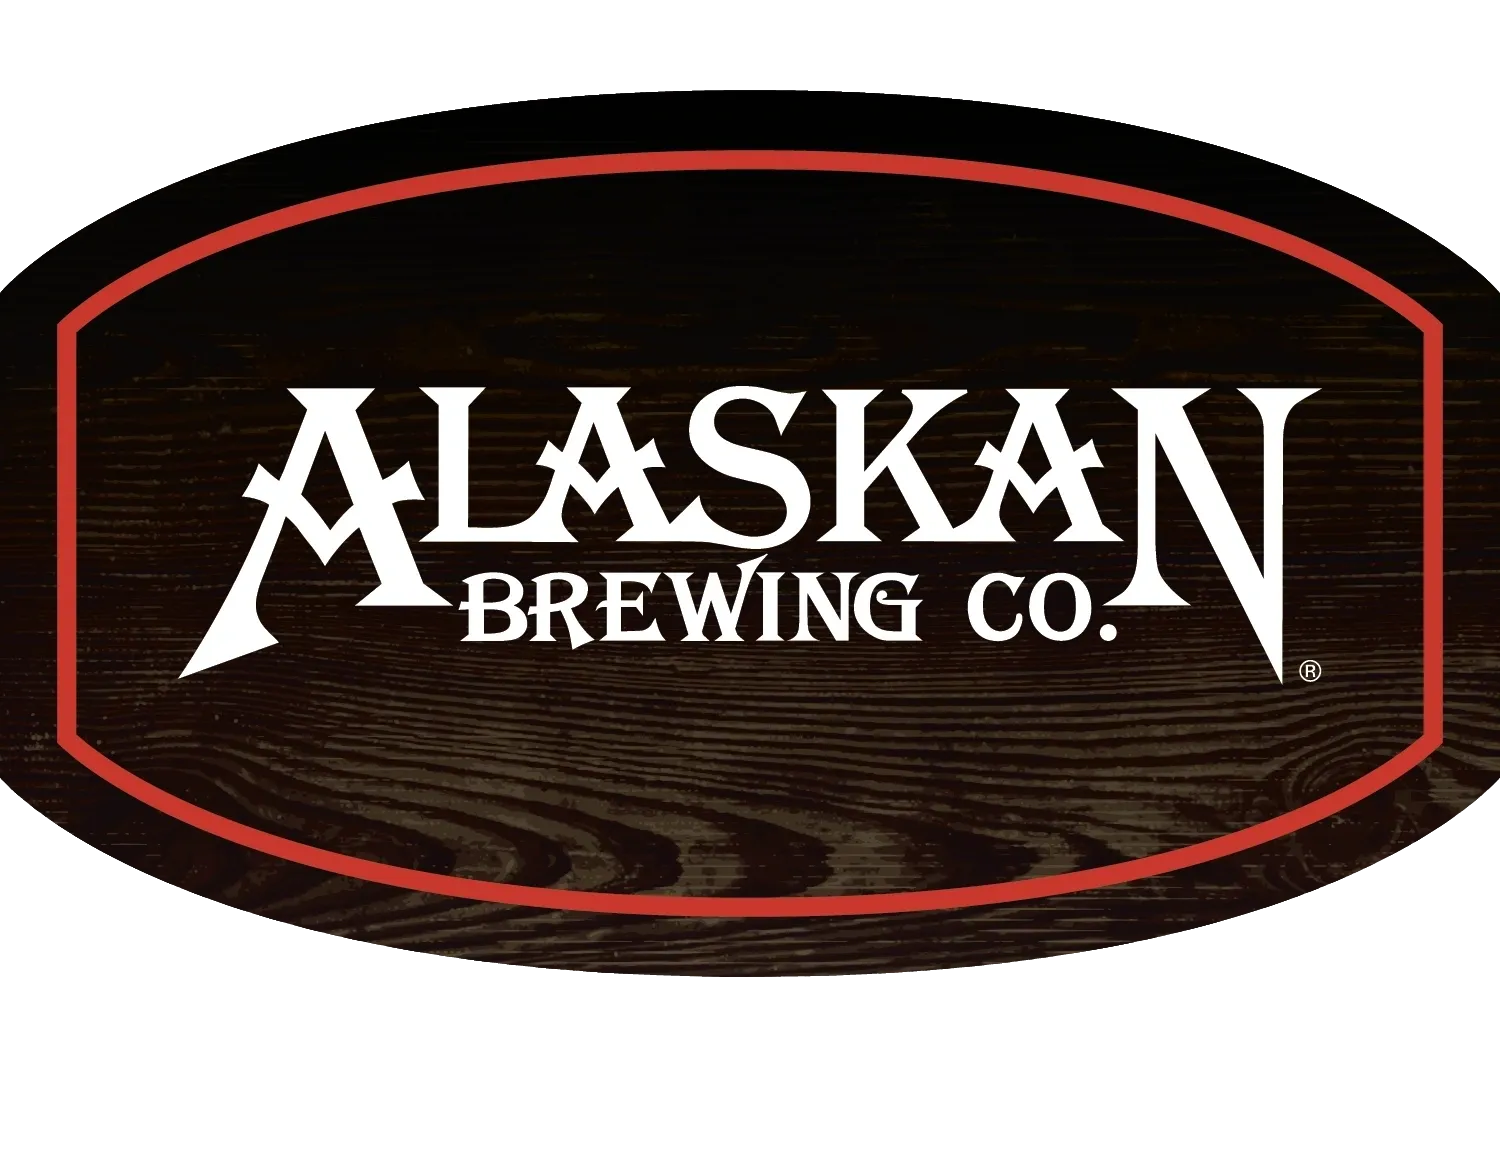 A logo of alaskan brewing company.